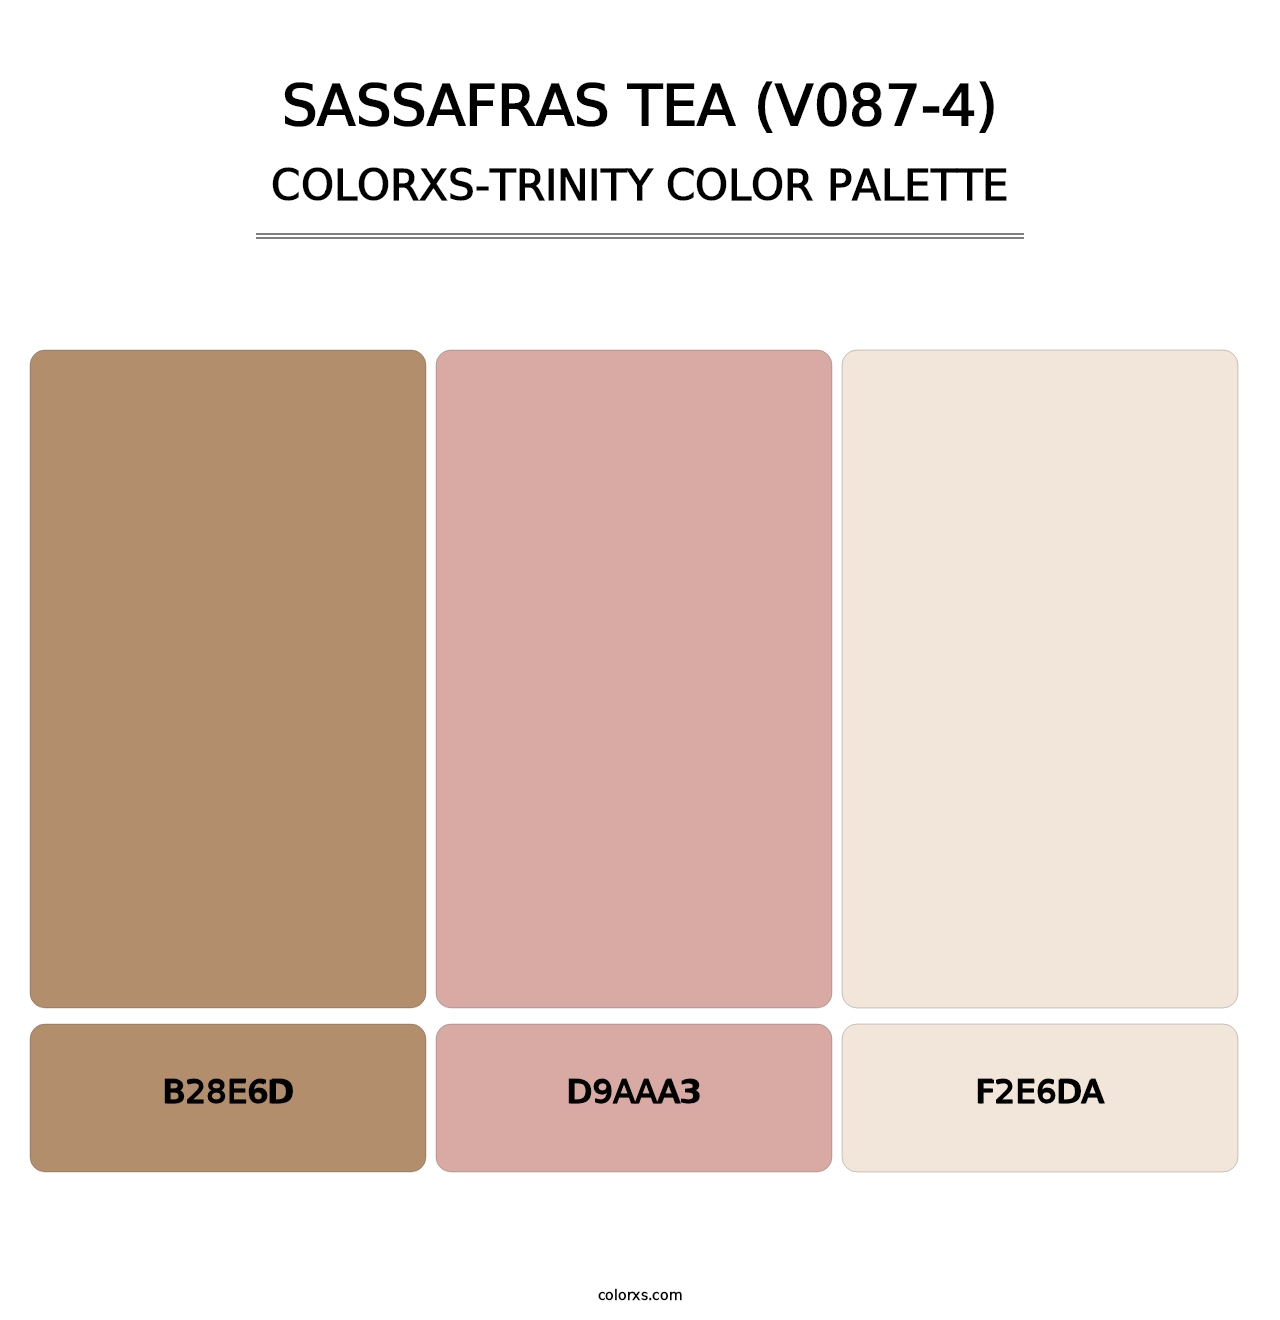 Sassafras Tea (V087-4) - Colorxs Trinity Palette